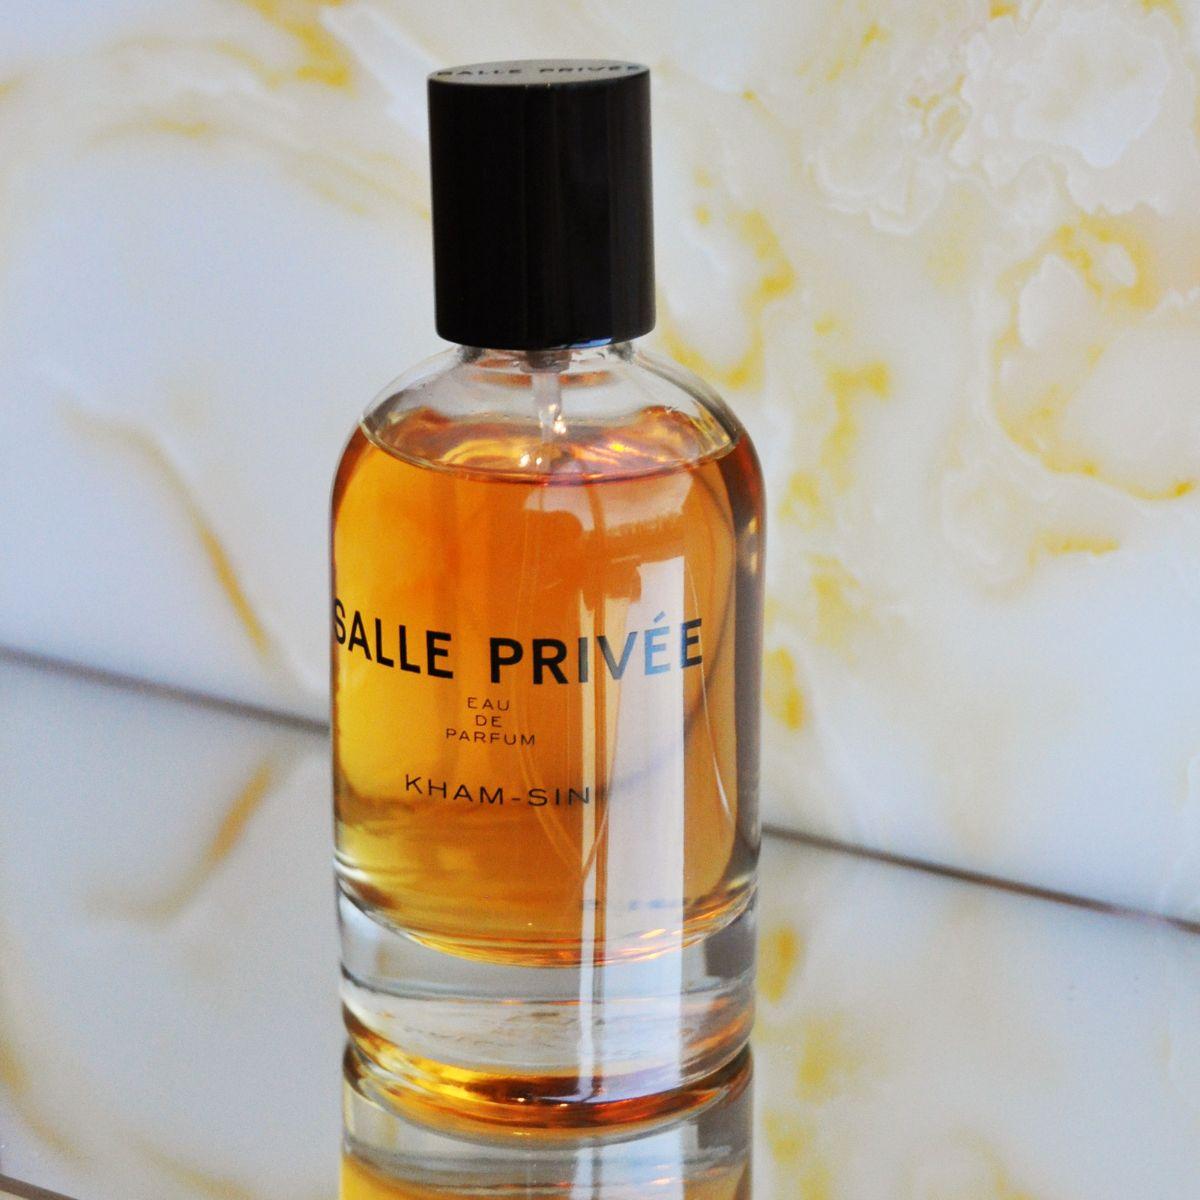 Image of Kham-Sin eau de parfum 100 ml by the perfume brand Salle Privee